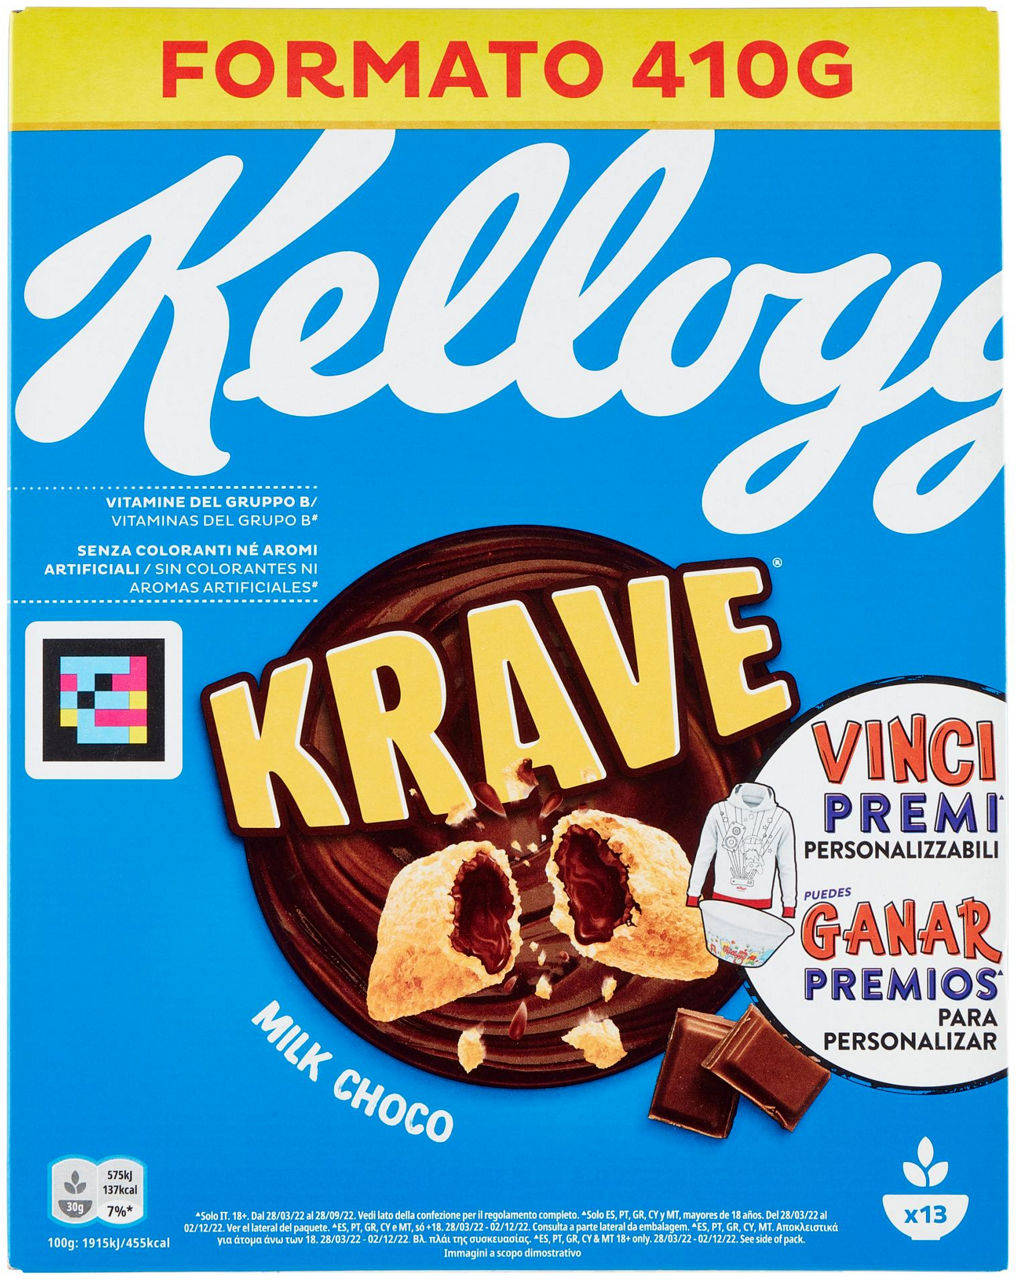 Cereali choco krave milk kellogg's scatola g 410